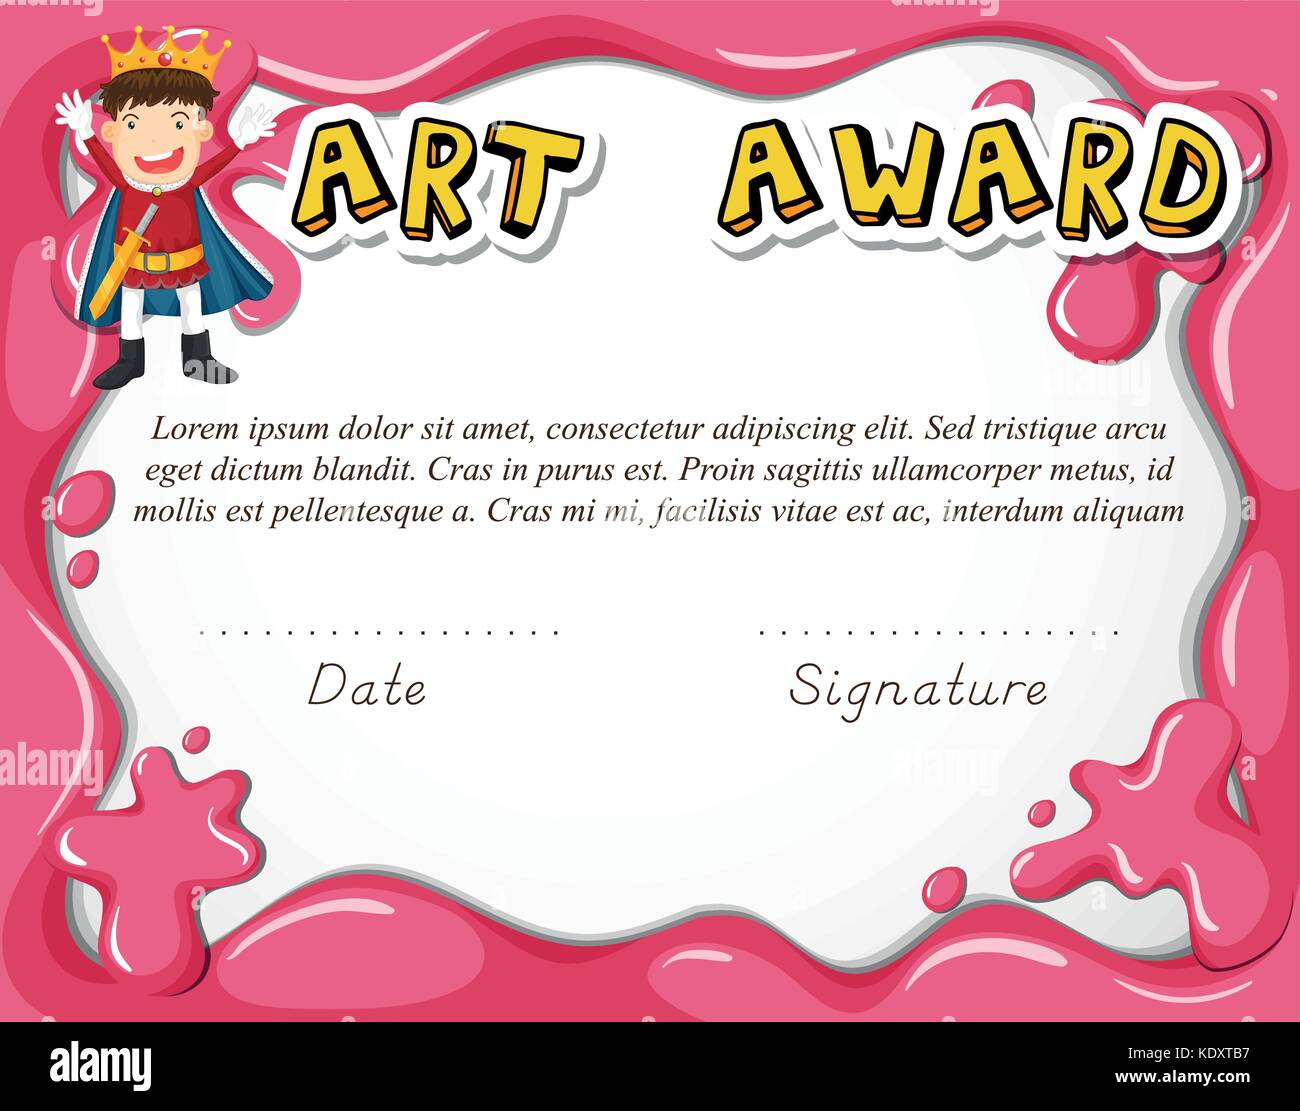 Art Award Zertifikat mit Boy als Held illustration Stock Vektor